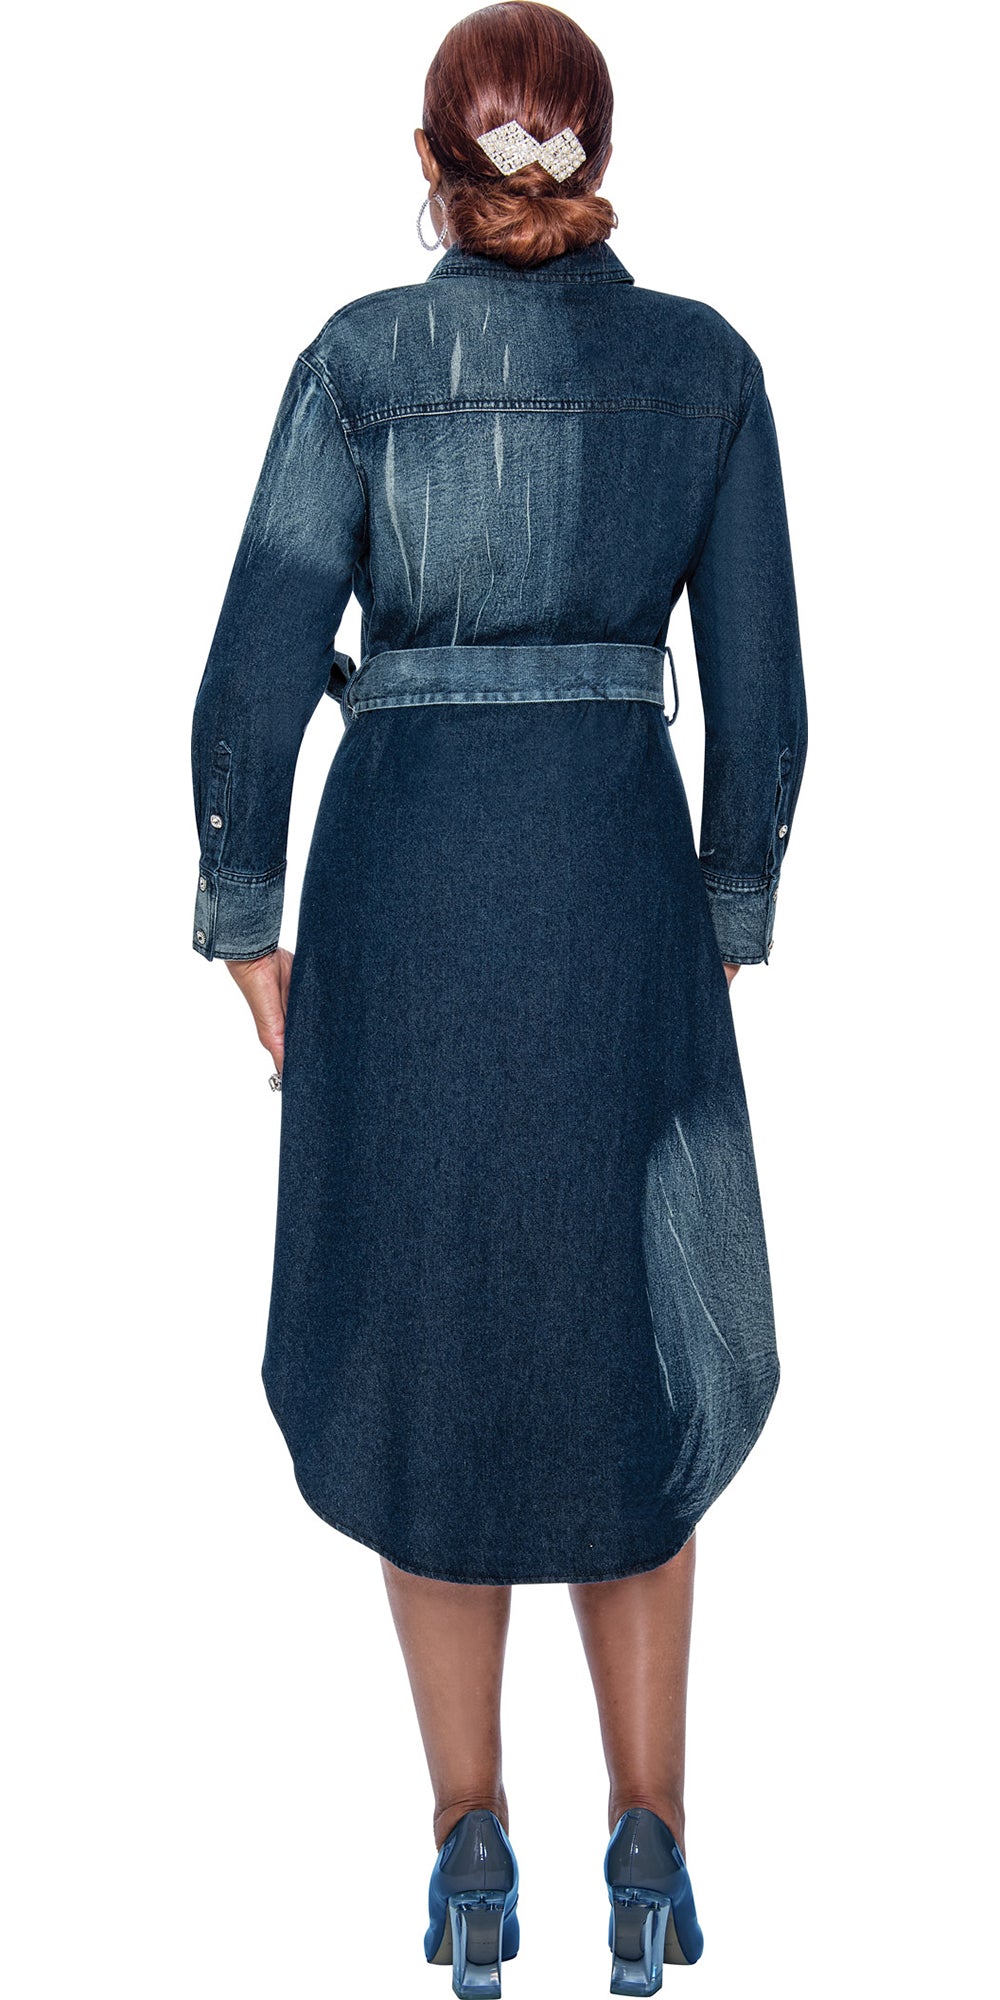 Dorinda Clark Cole - DCC4981 - Belted Denim Dress